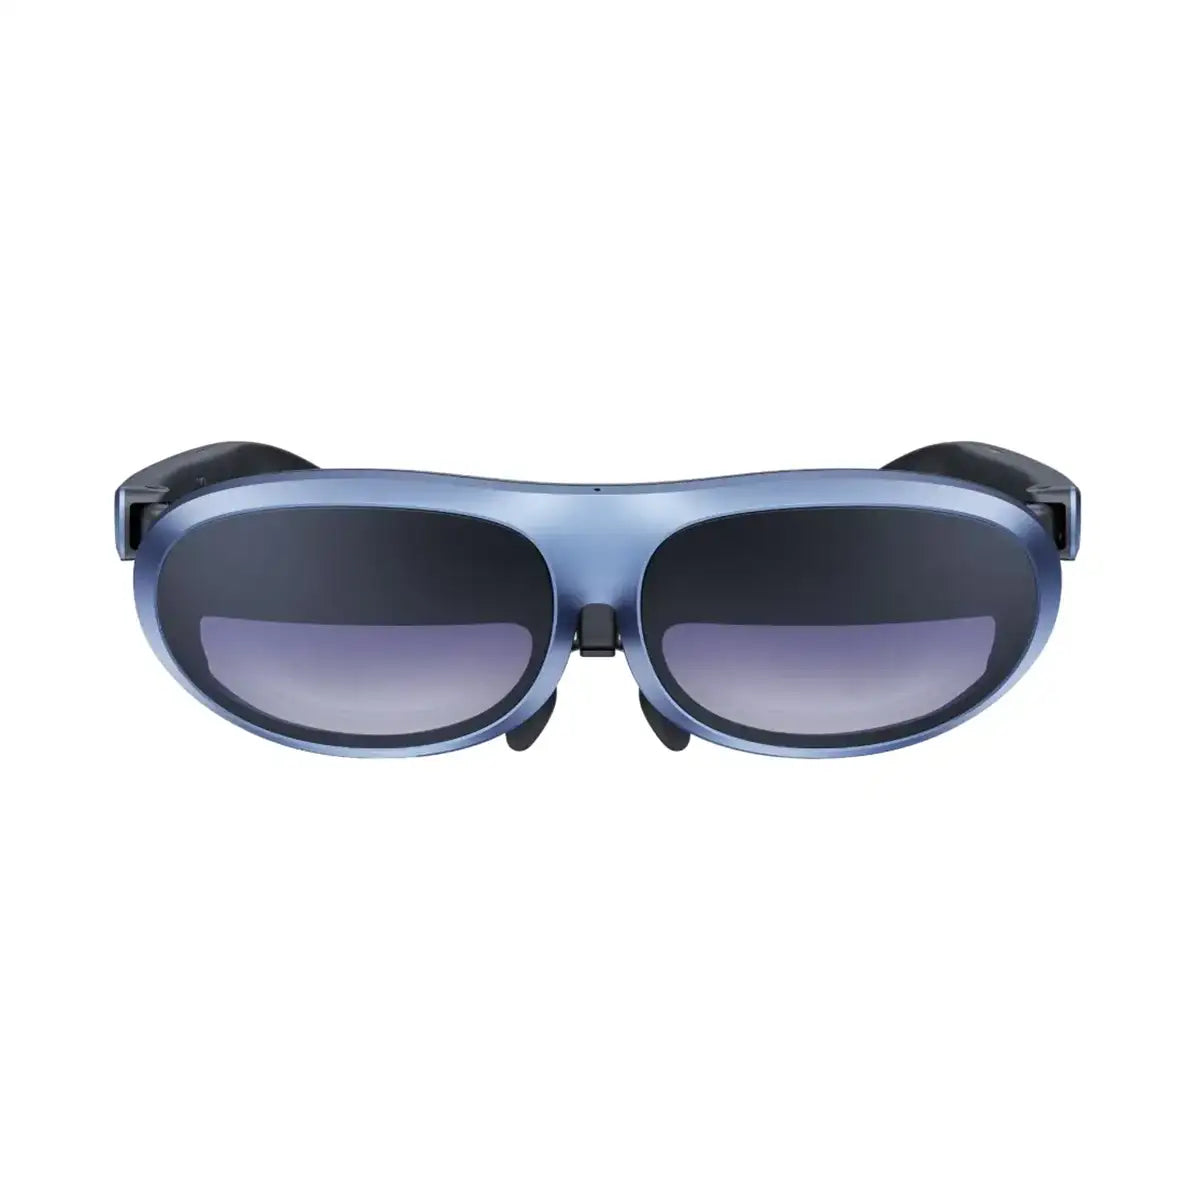 Rokid AR JOY Pack (Rokid Max AR Glasses + Station) | AR Glasses 